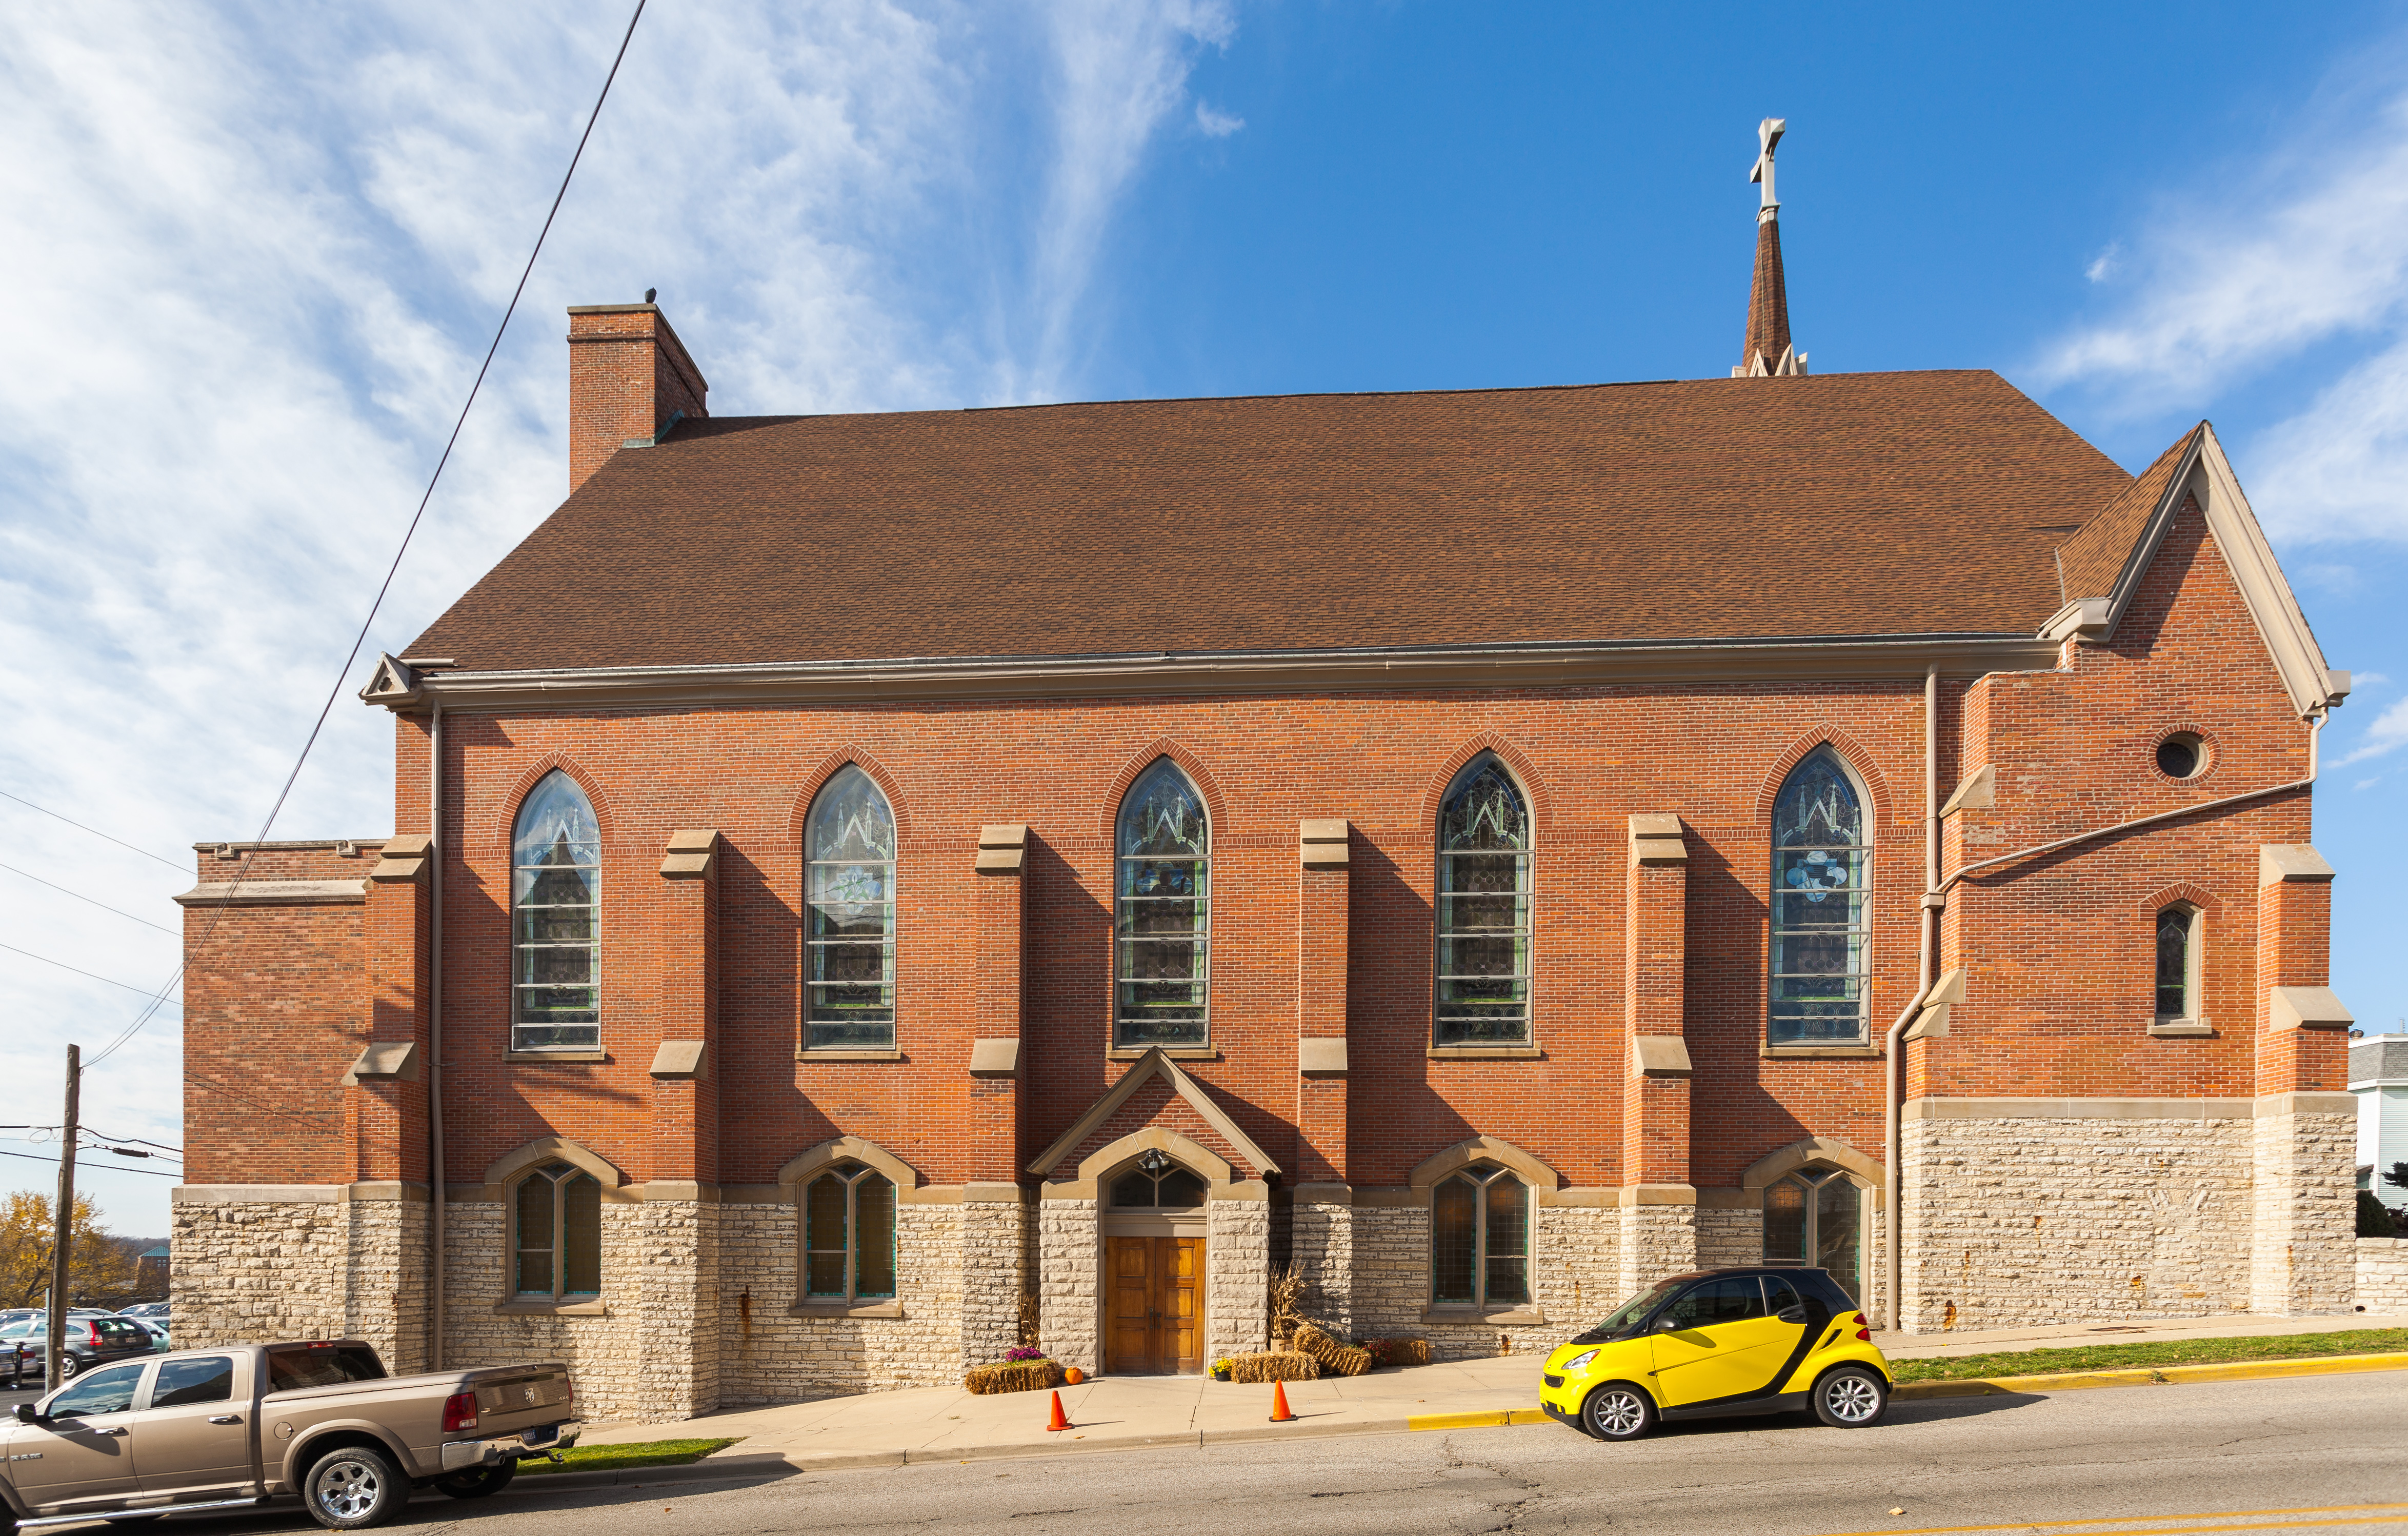 Iglesia de Cristo, Wabash, Indiana, Estados Unidos, 2012-11-12, DD 02